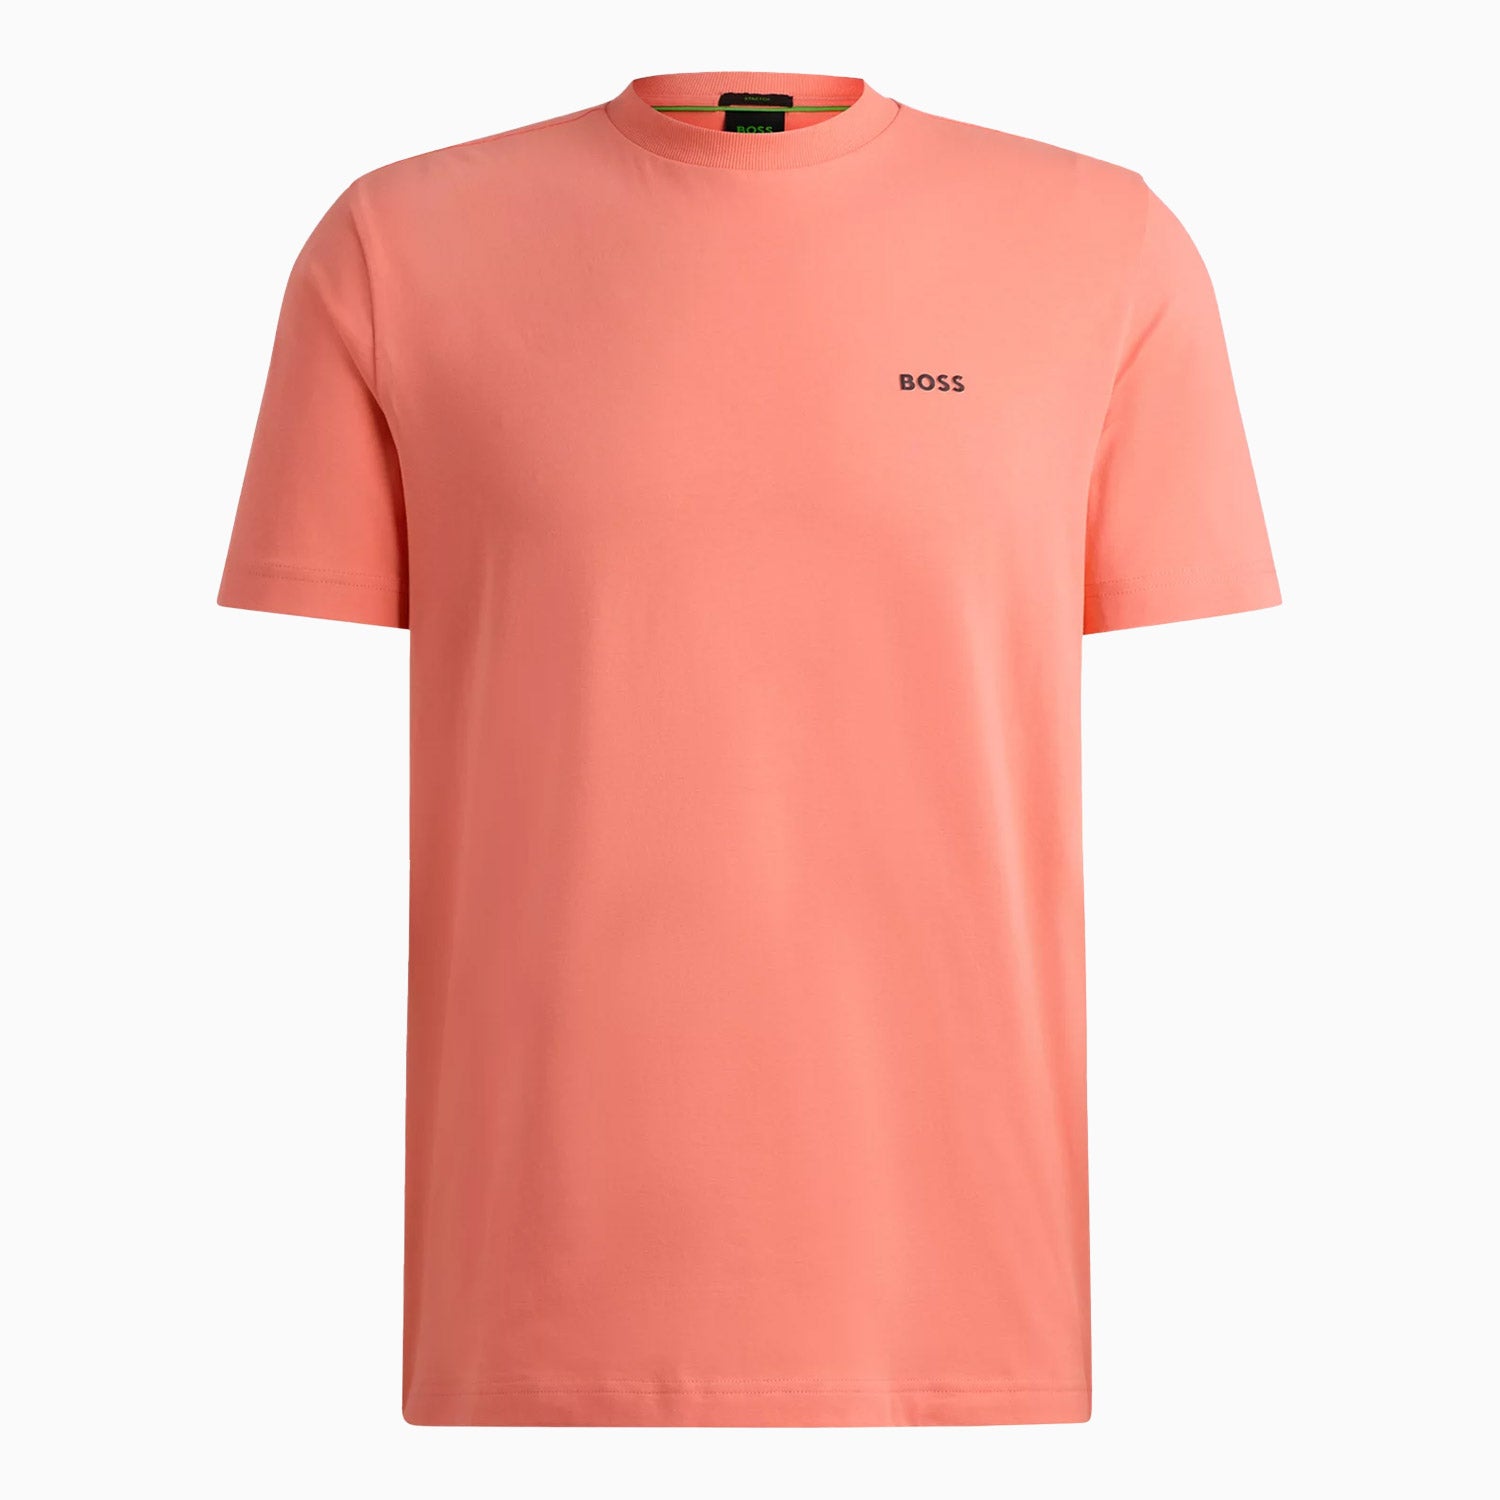 hugo-boss-mens-stretch-cotton-regular-fit-t-shirt-with-contrast-logo-50506373-649